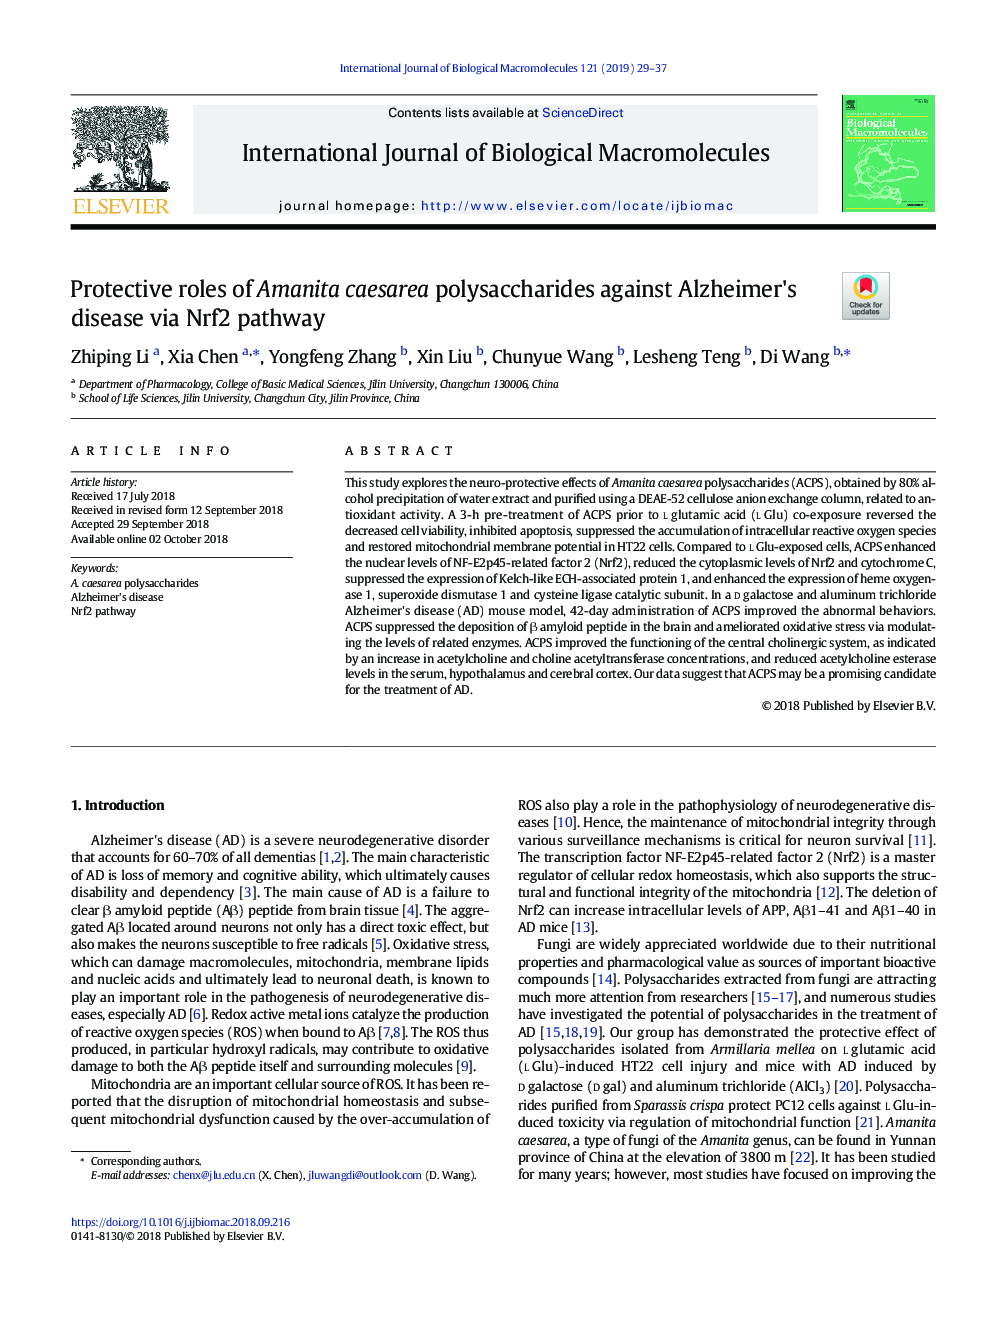 Protective roles of Amanita caesarea polysaccharides against Alzheimer's disease via Nrf2 pathway